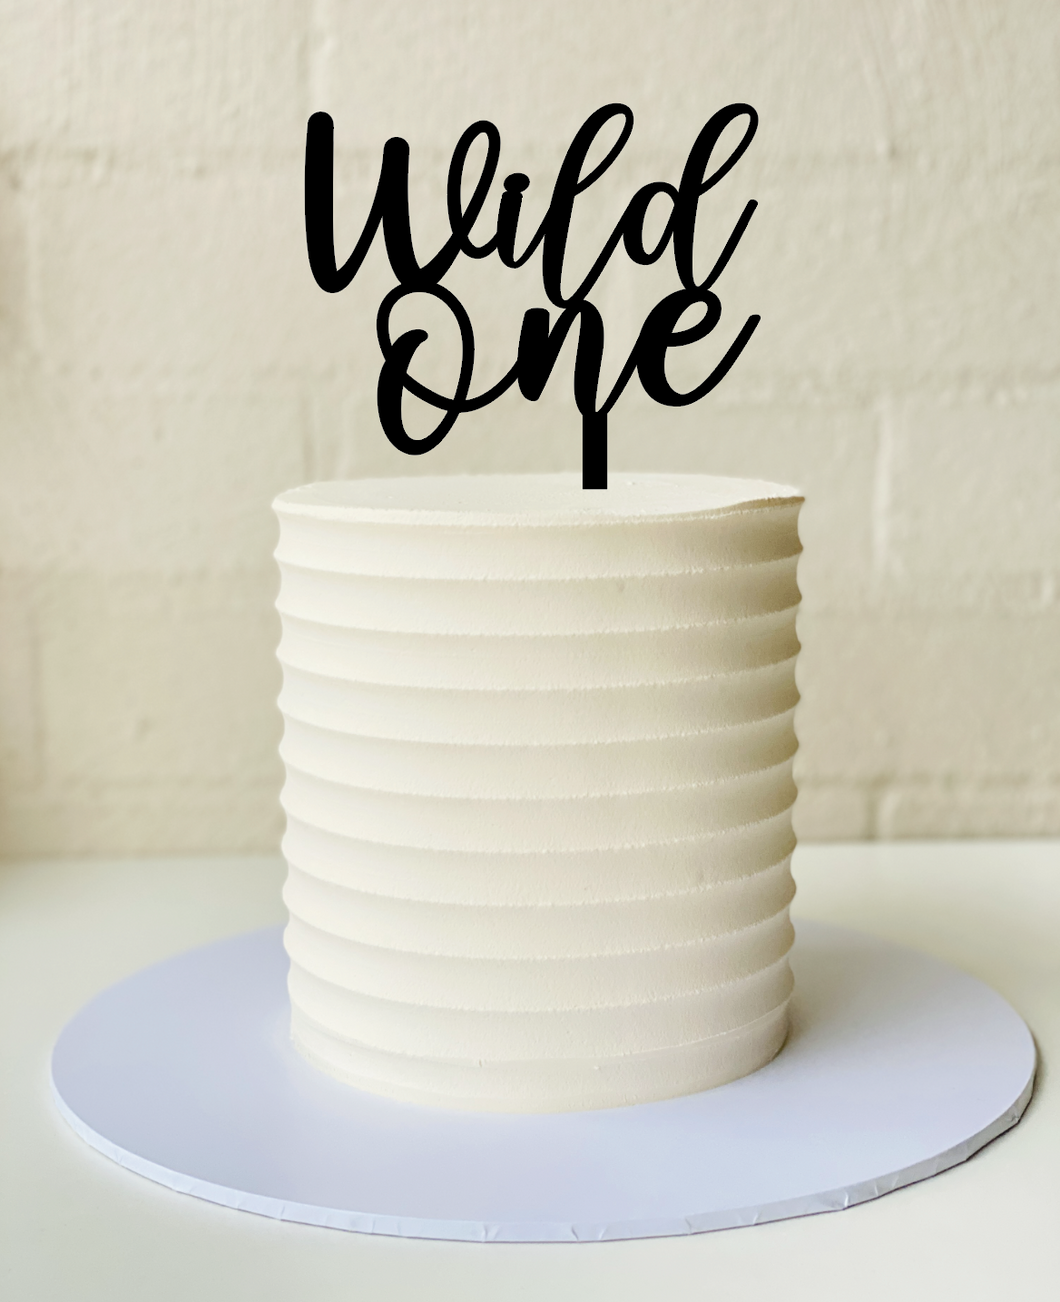 Wild One cake topper